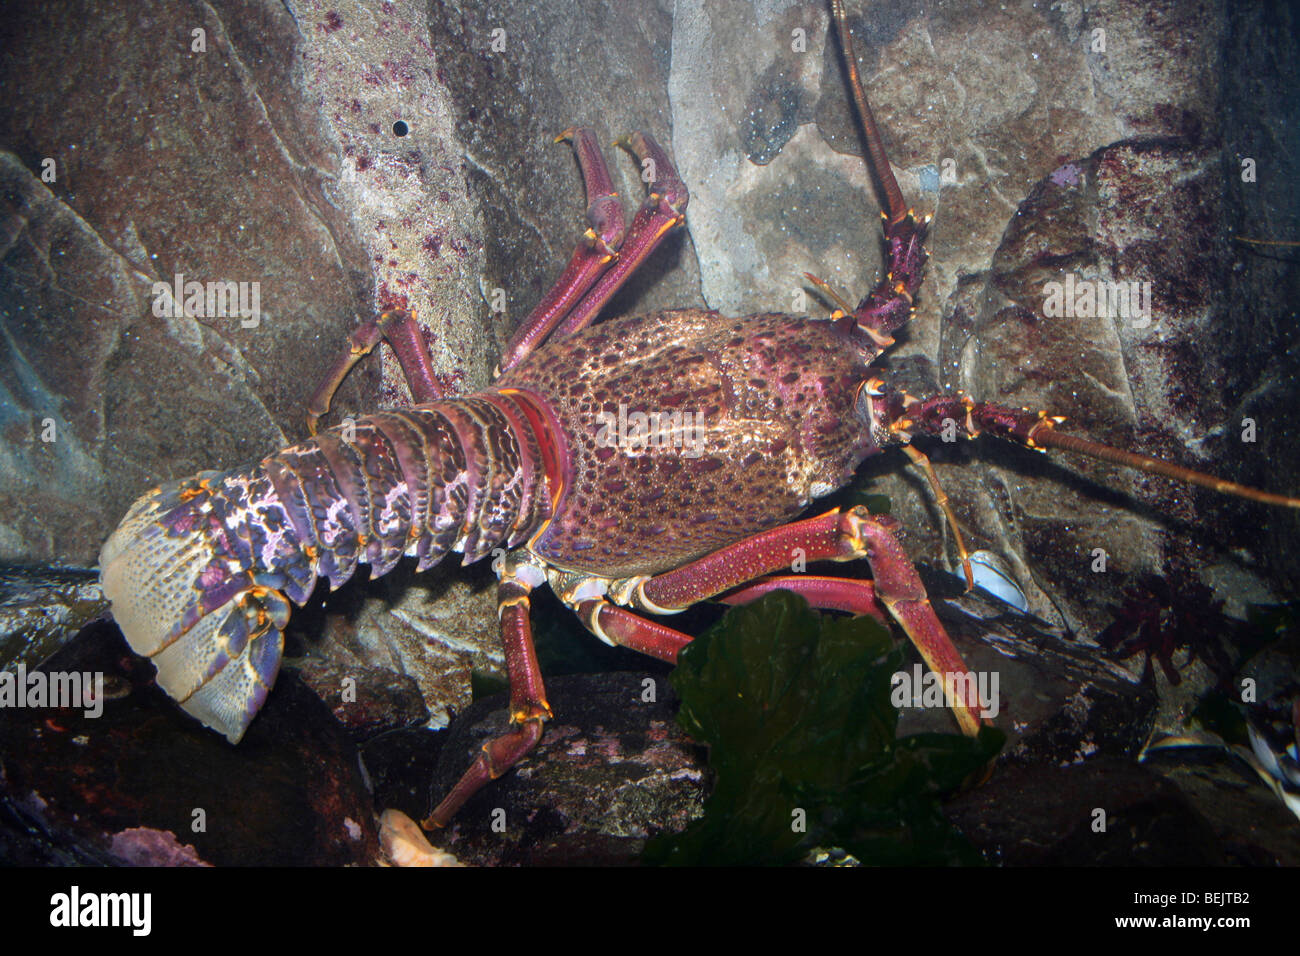 West Coast Rock Lobster Jasus Lalandii genommen im Two Oceans Aquarium, Kapstadt, Südafrika Stockfoto